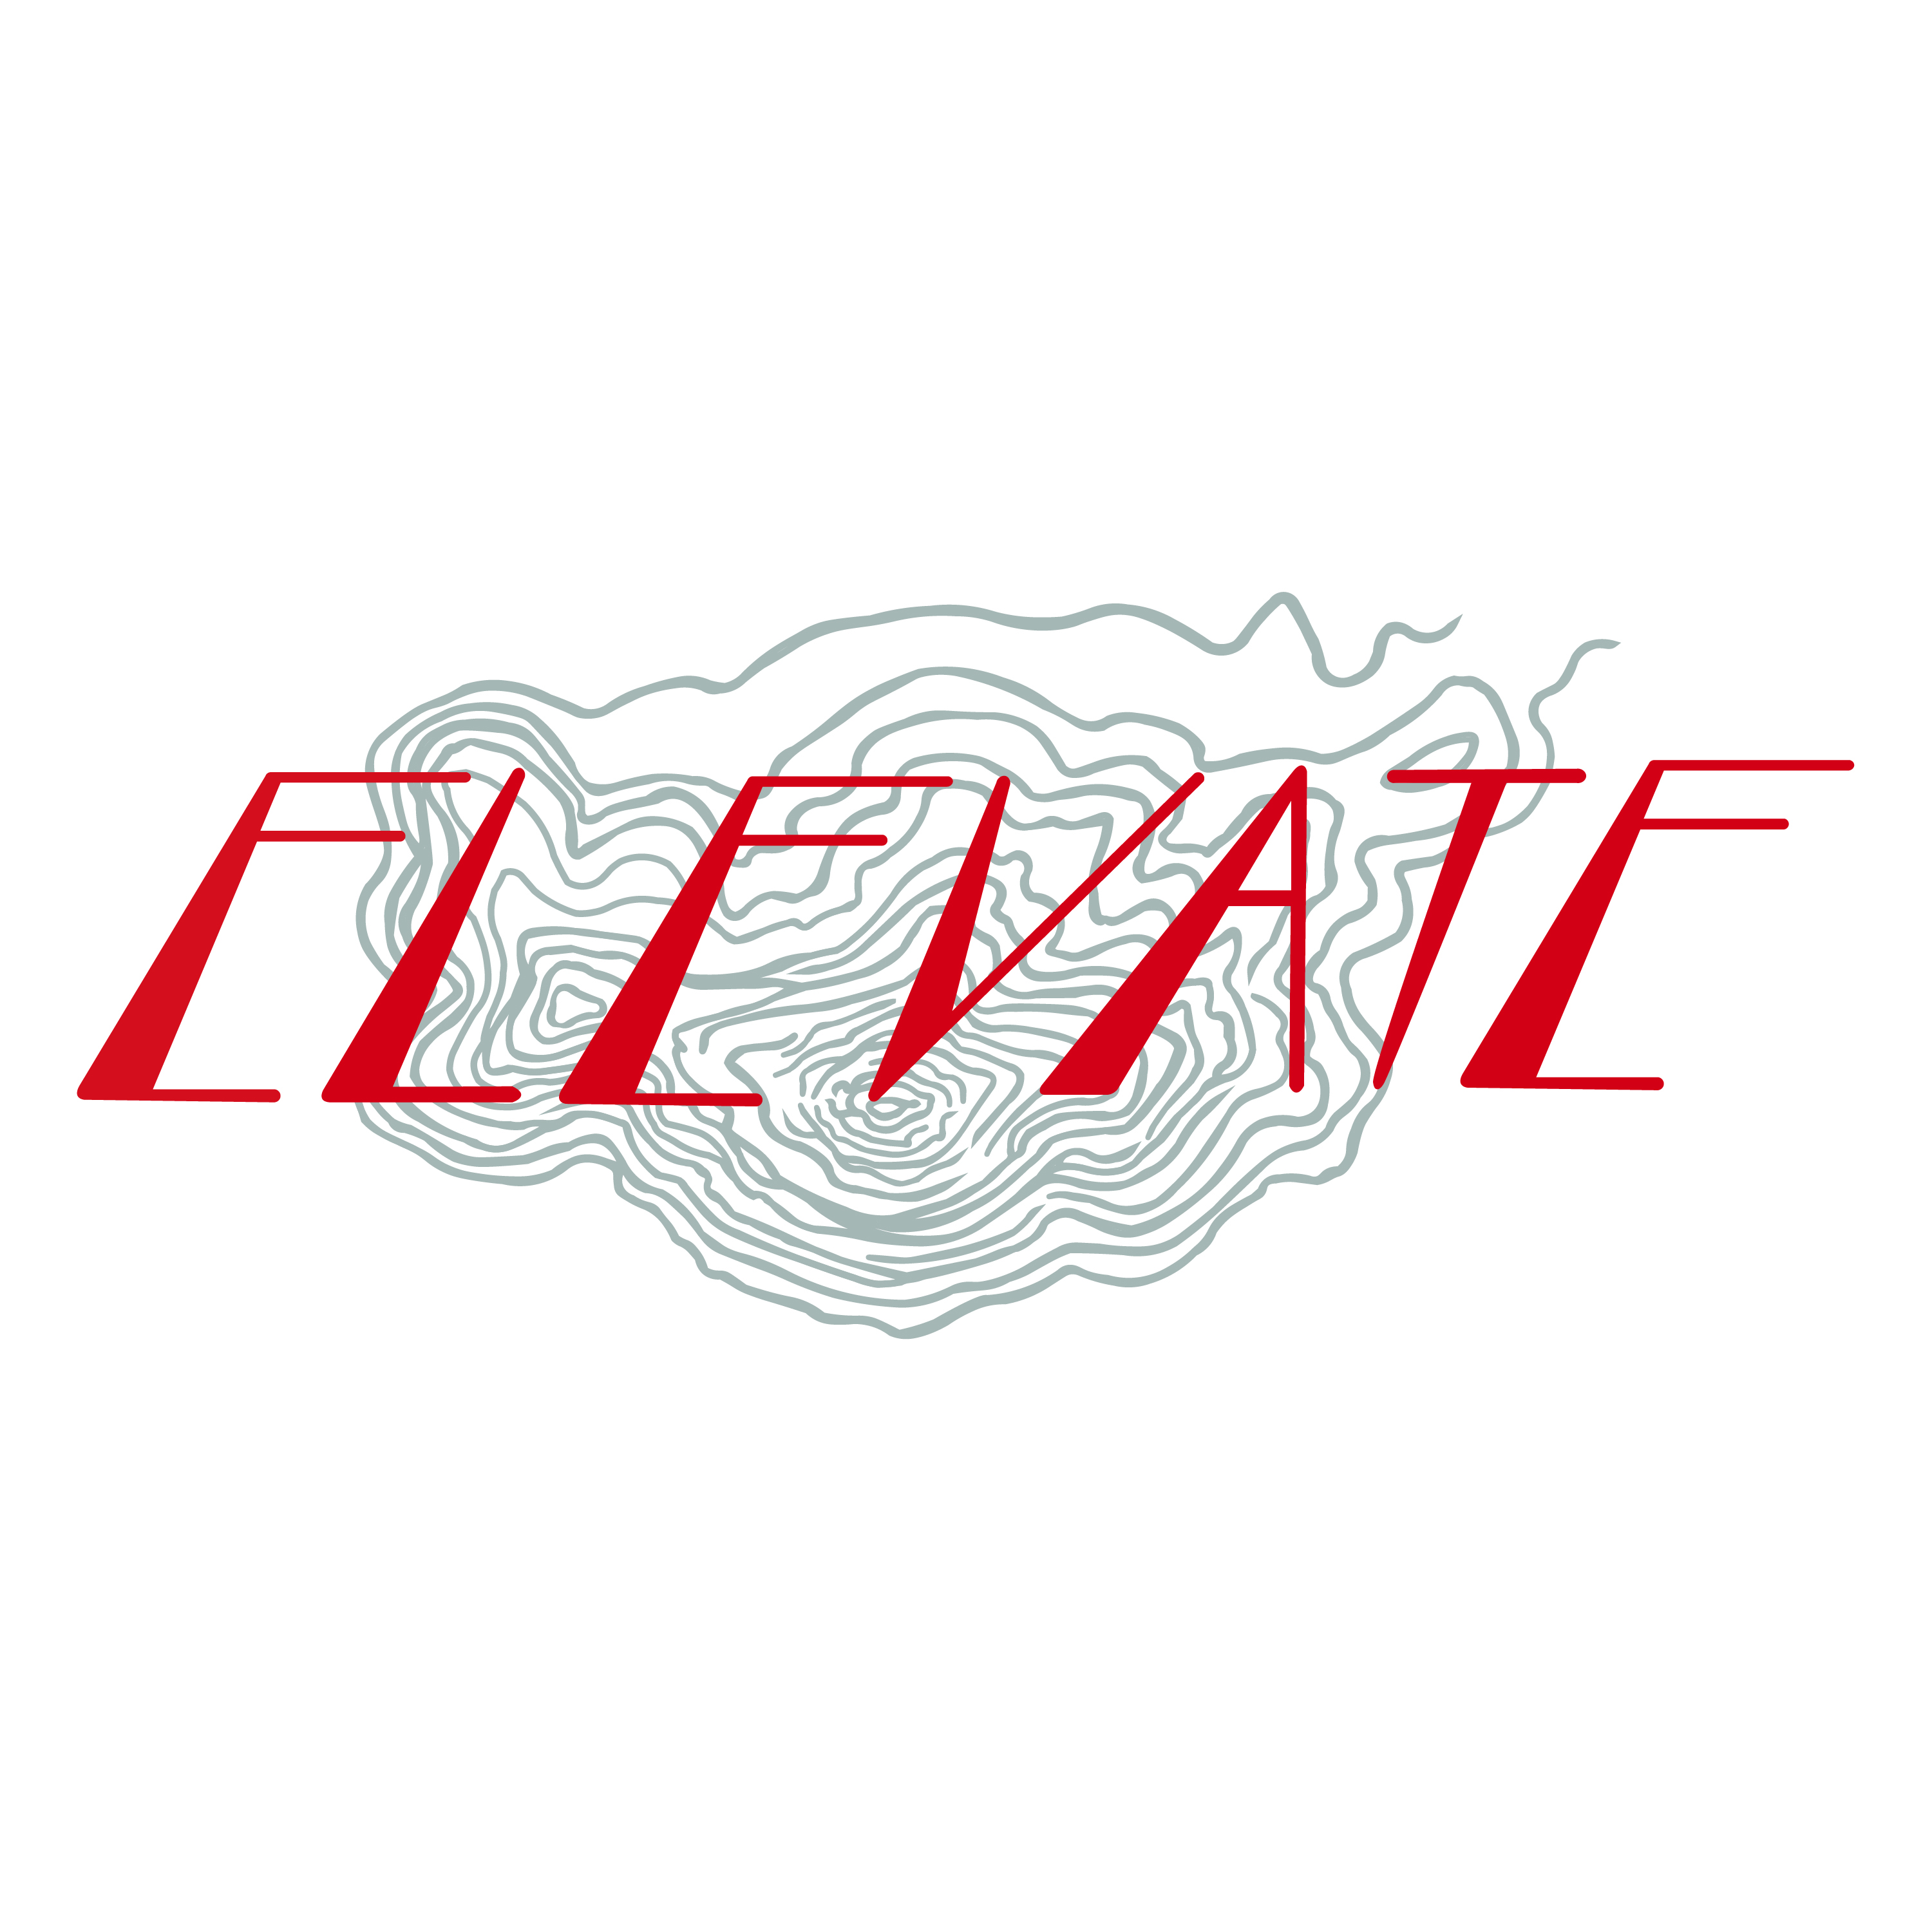 2022 visual art senior exhibition logo that reads "elevate"